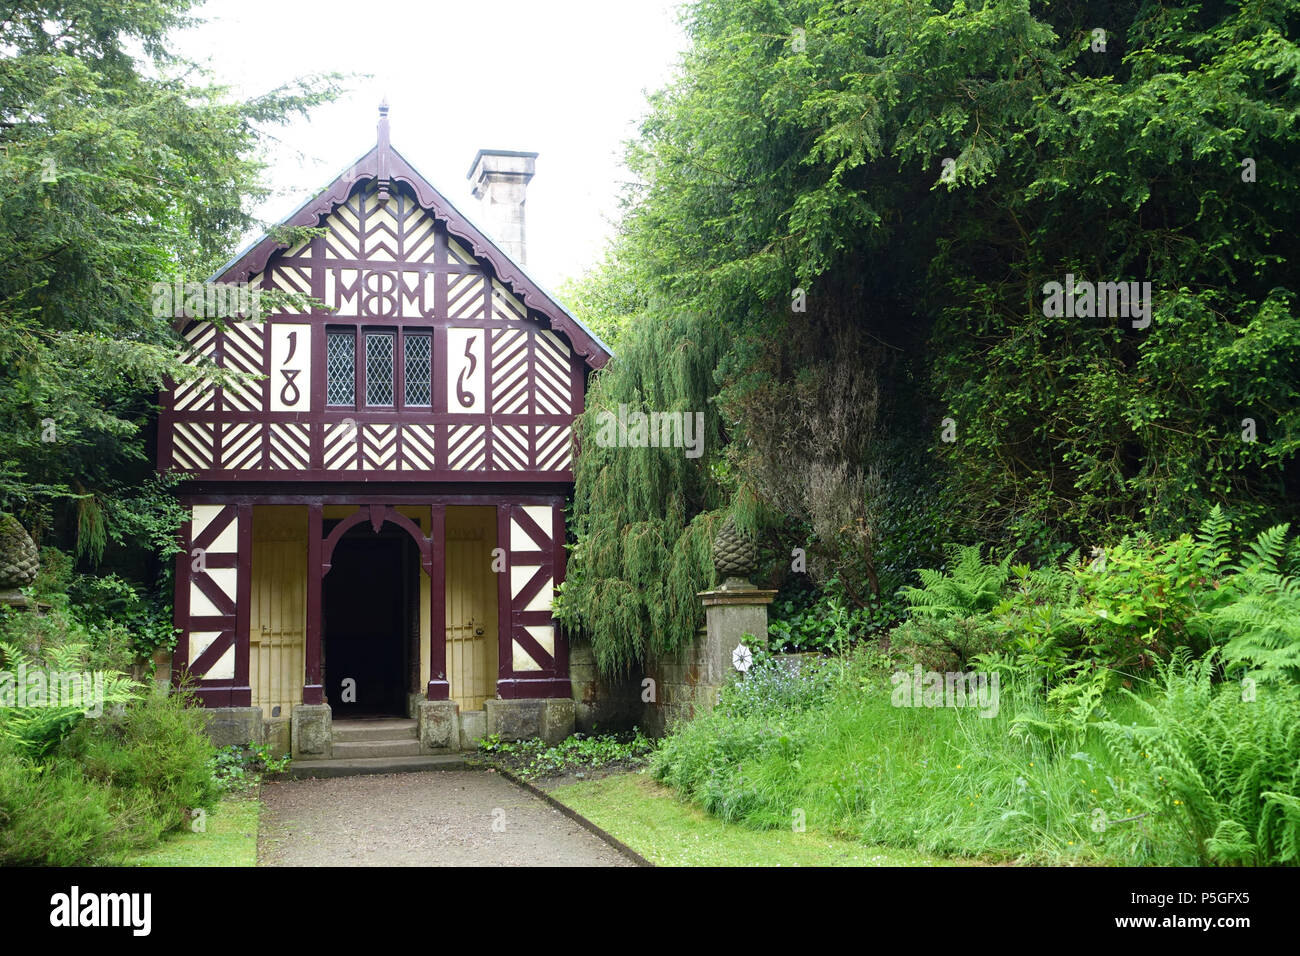 N/A. Inglese: Cheshire Cottage - Biddulph Grange giardino - Staffordshire, Inghilterra. 11 giugno 2016, 07:08:32. Daderot 337 Cheshire Cottage - Biddulph Grange giardino - Staffordshire, Inghilterra - DSC09195 Foto Stock